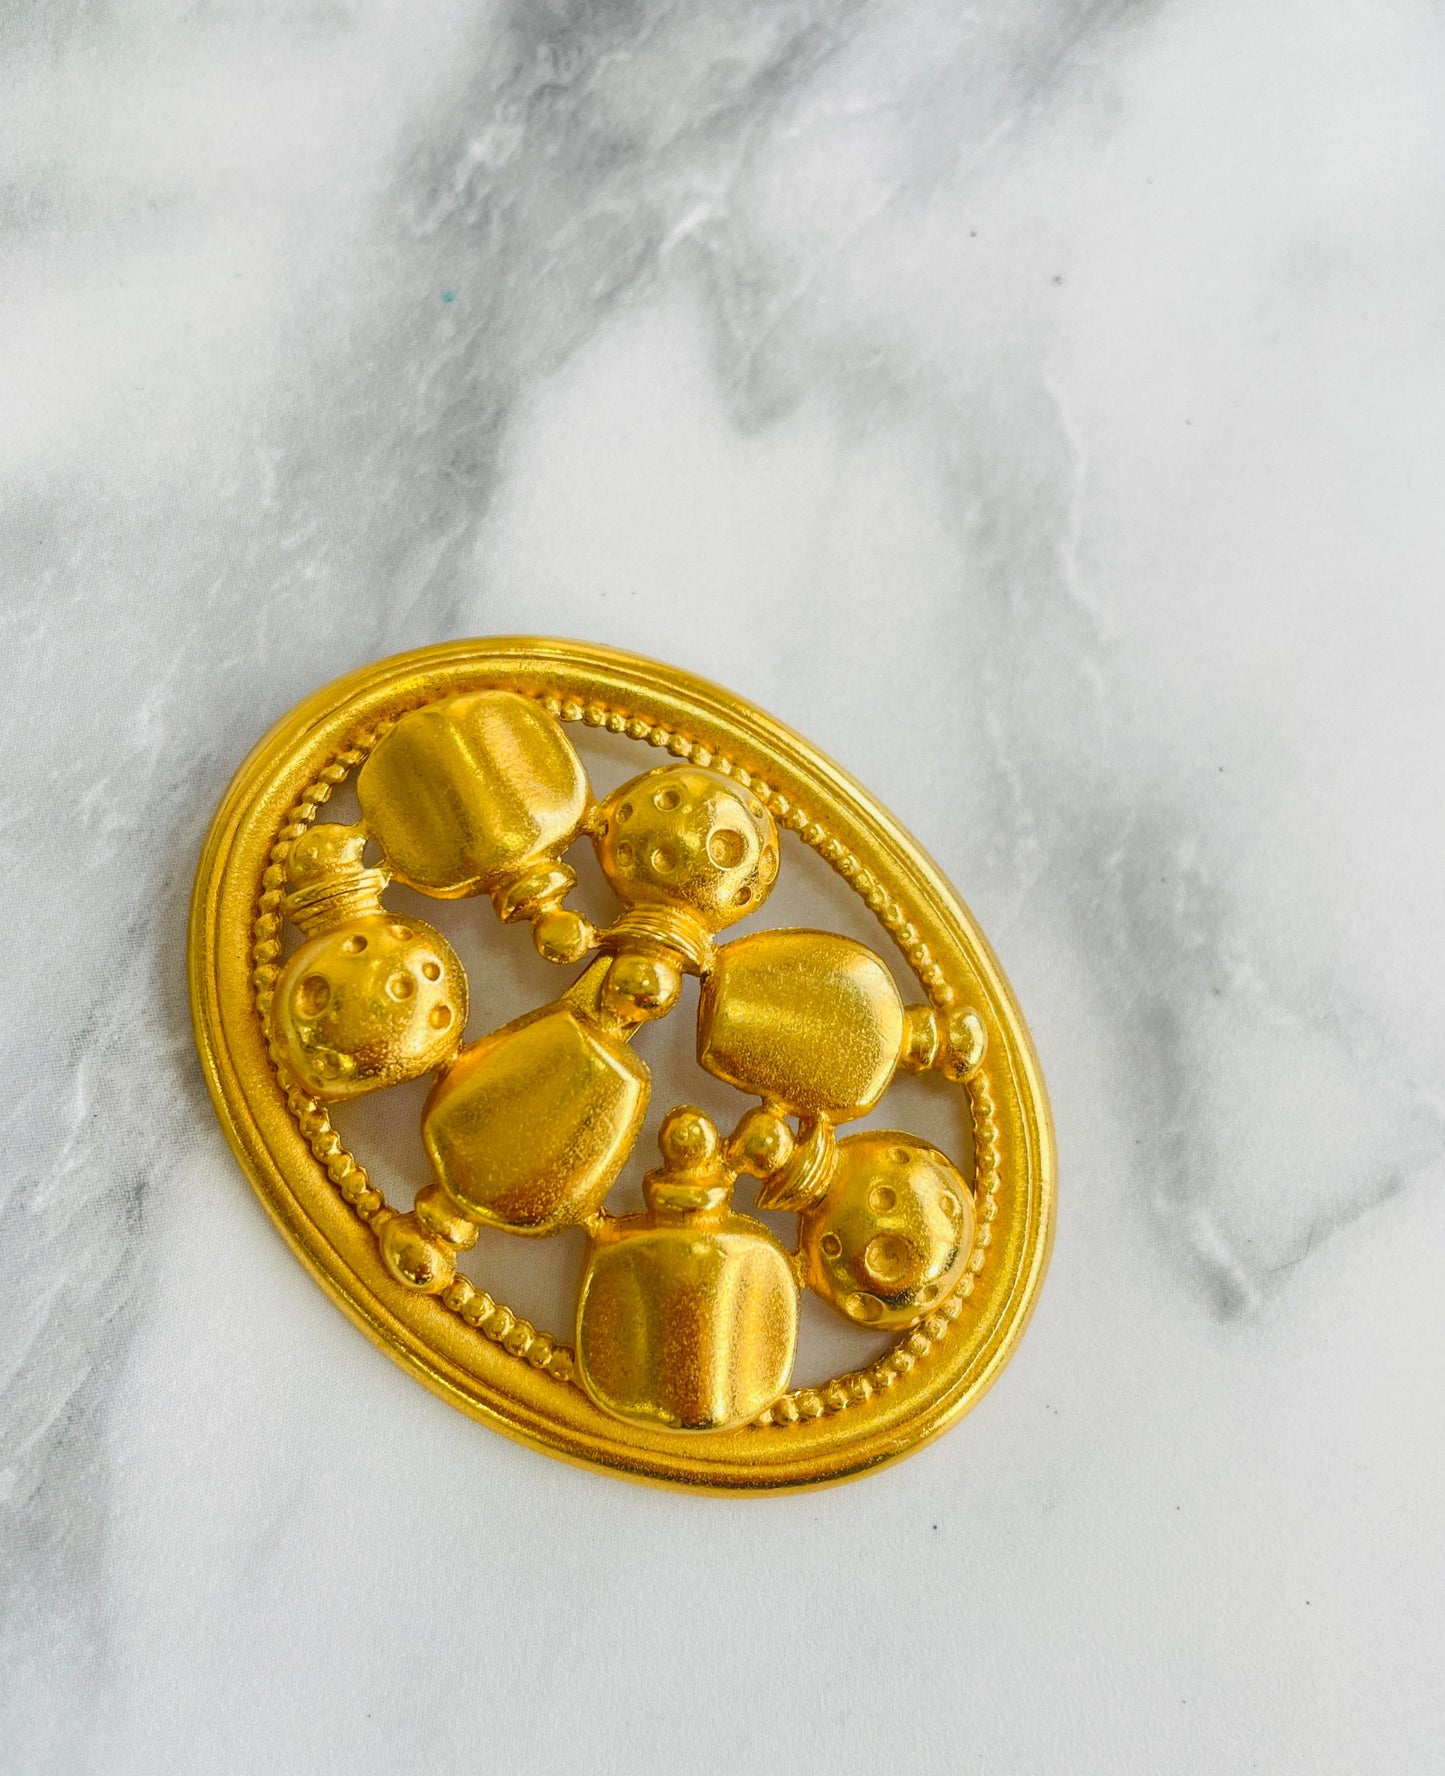 Christian Dior Perfumes motif Brooch Gold Accessory 7nrpyh